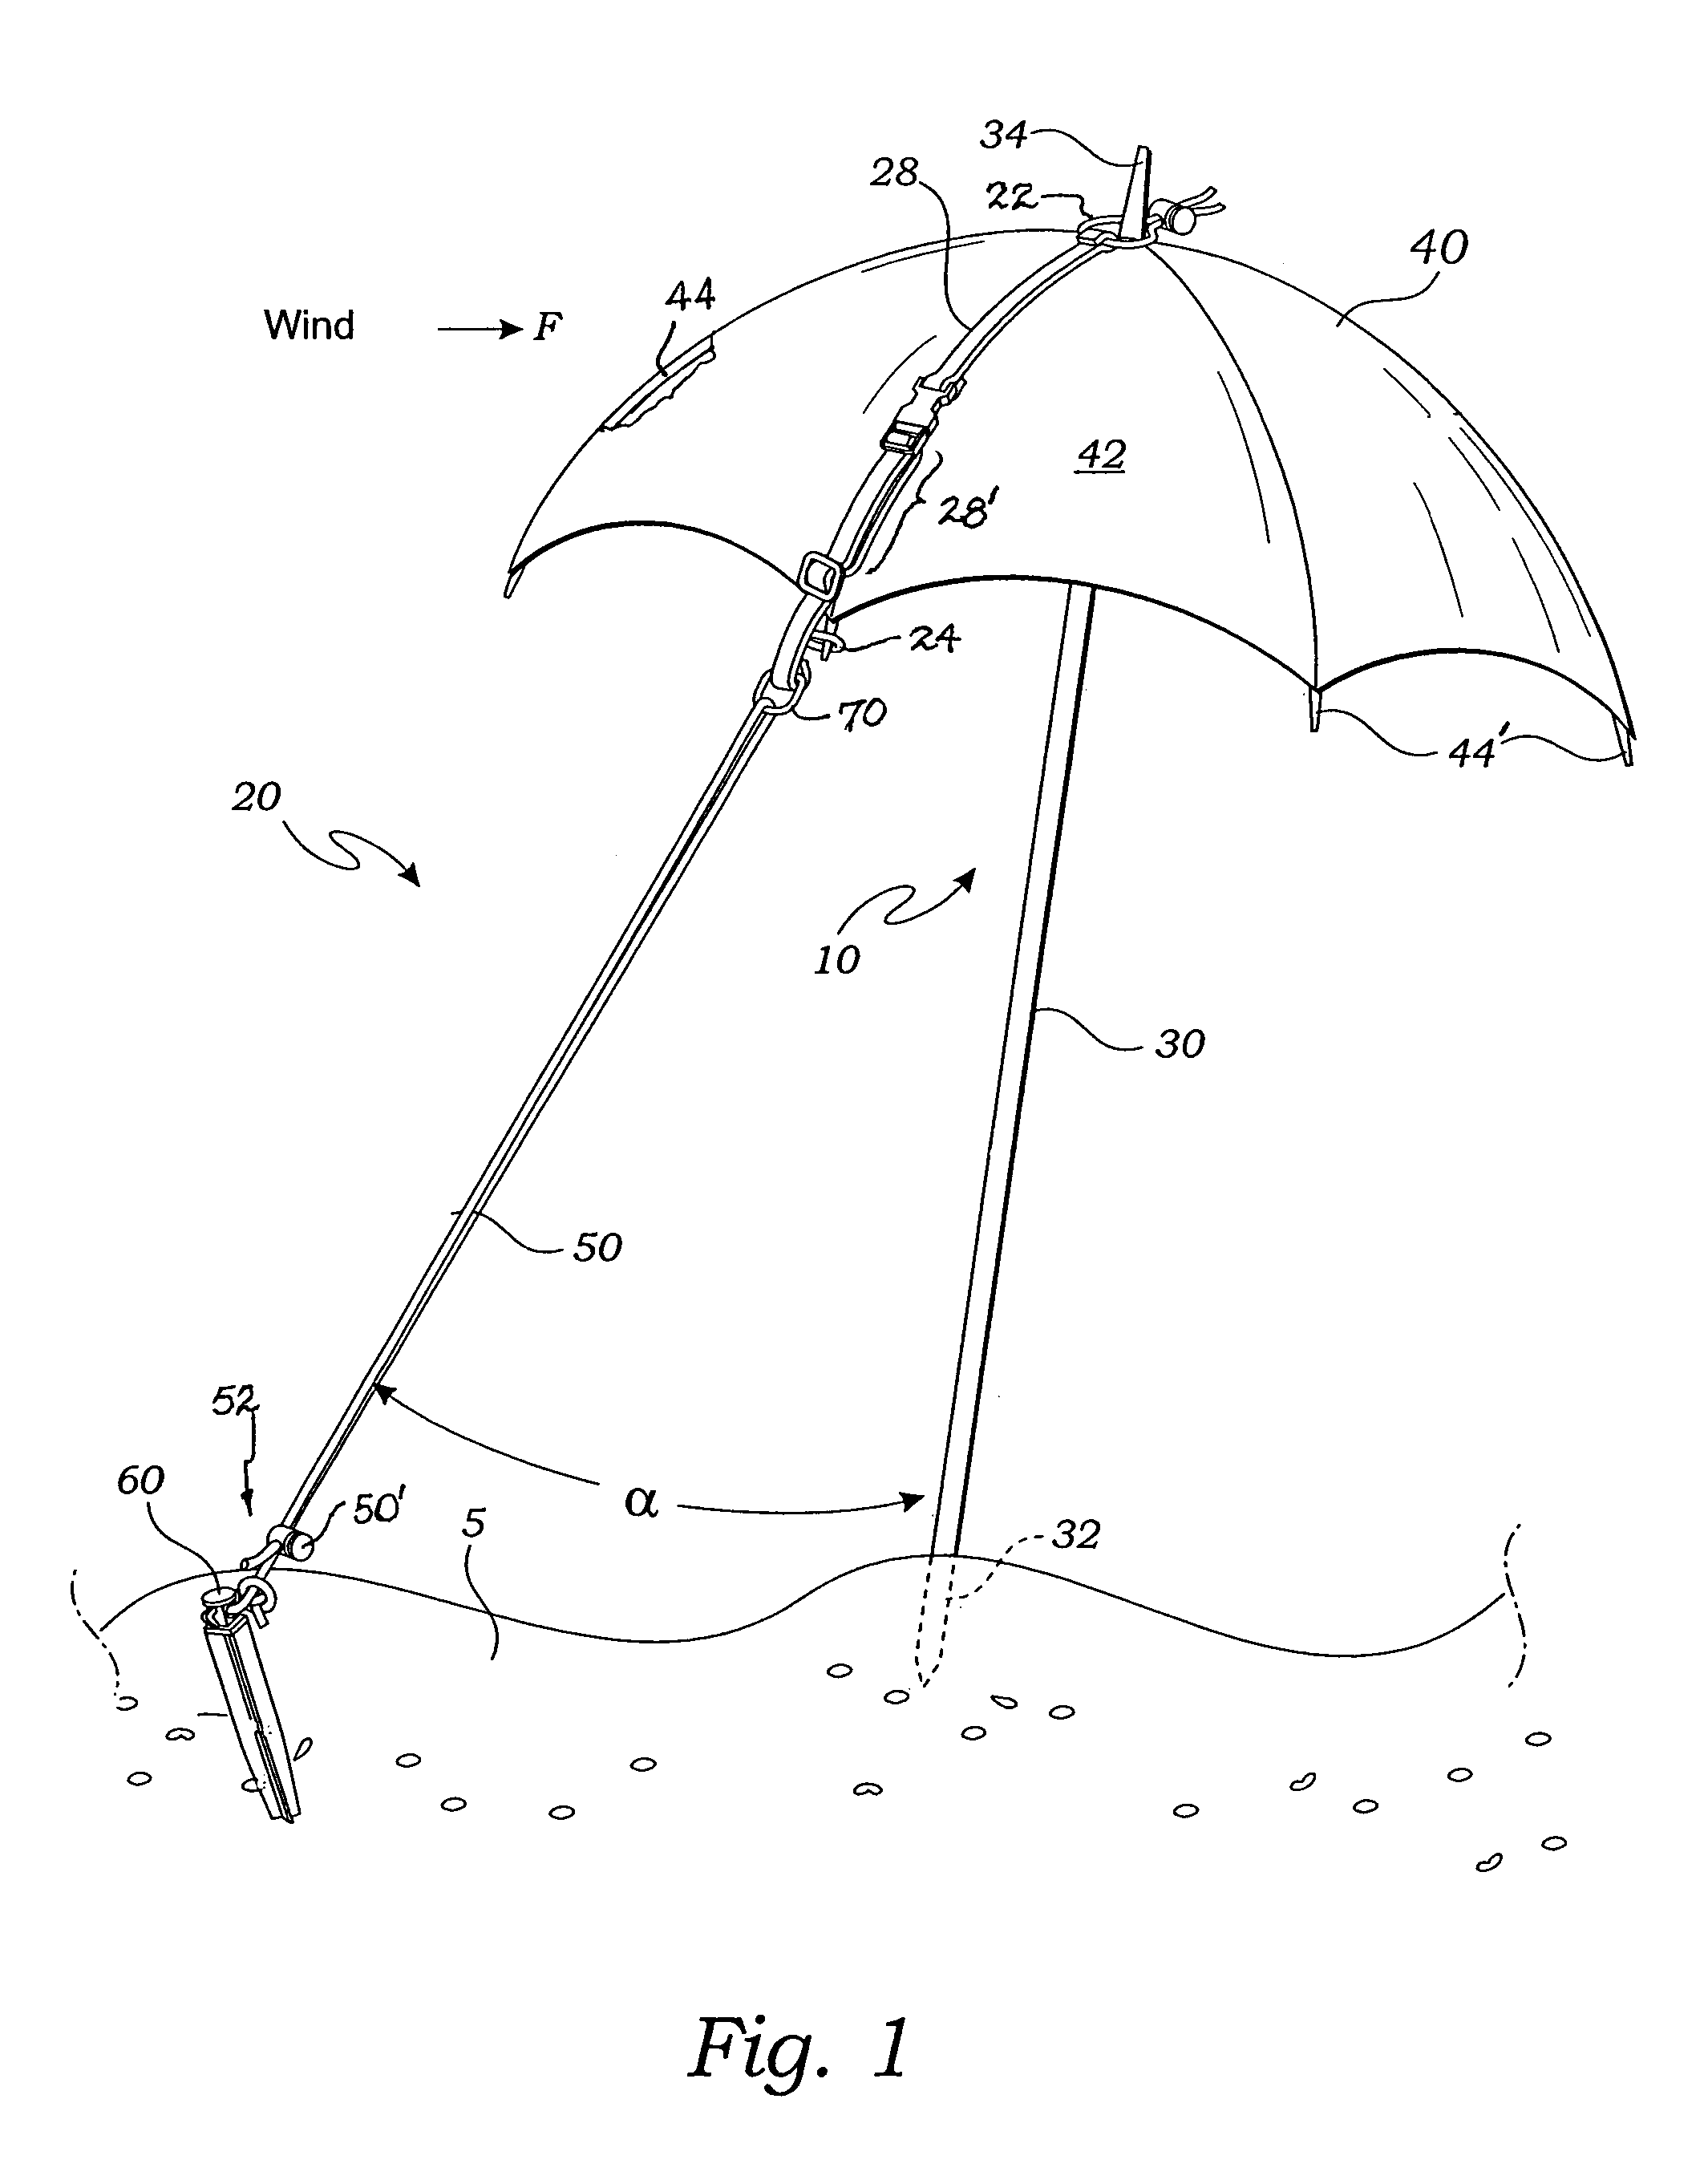 Tie-down for a beach umbrella